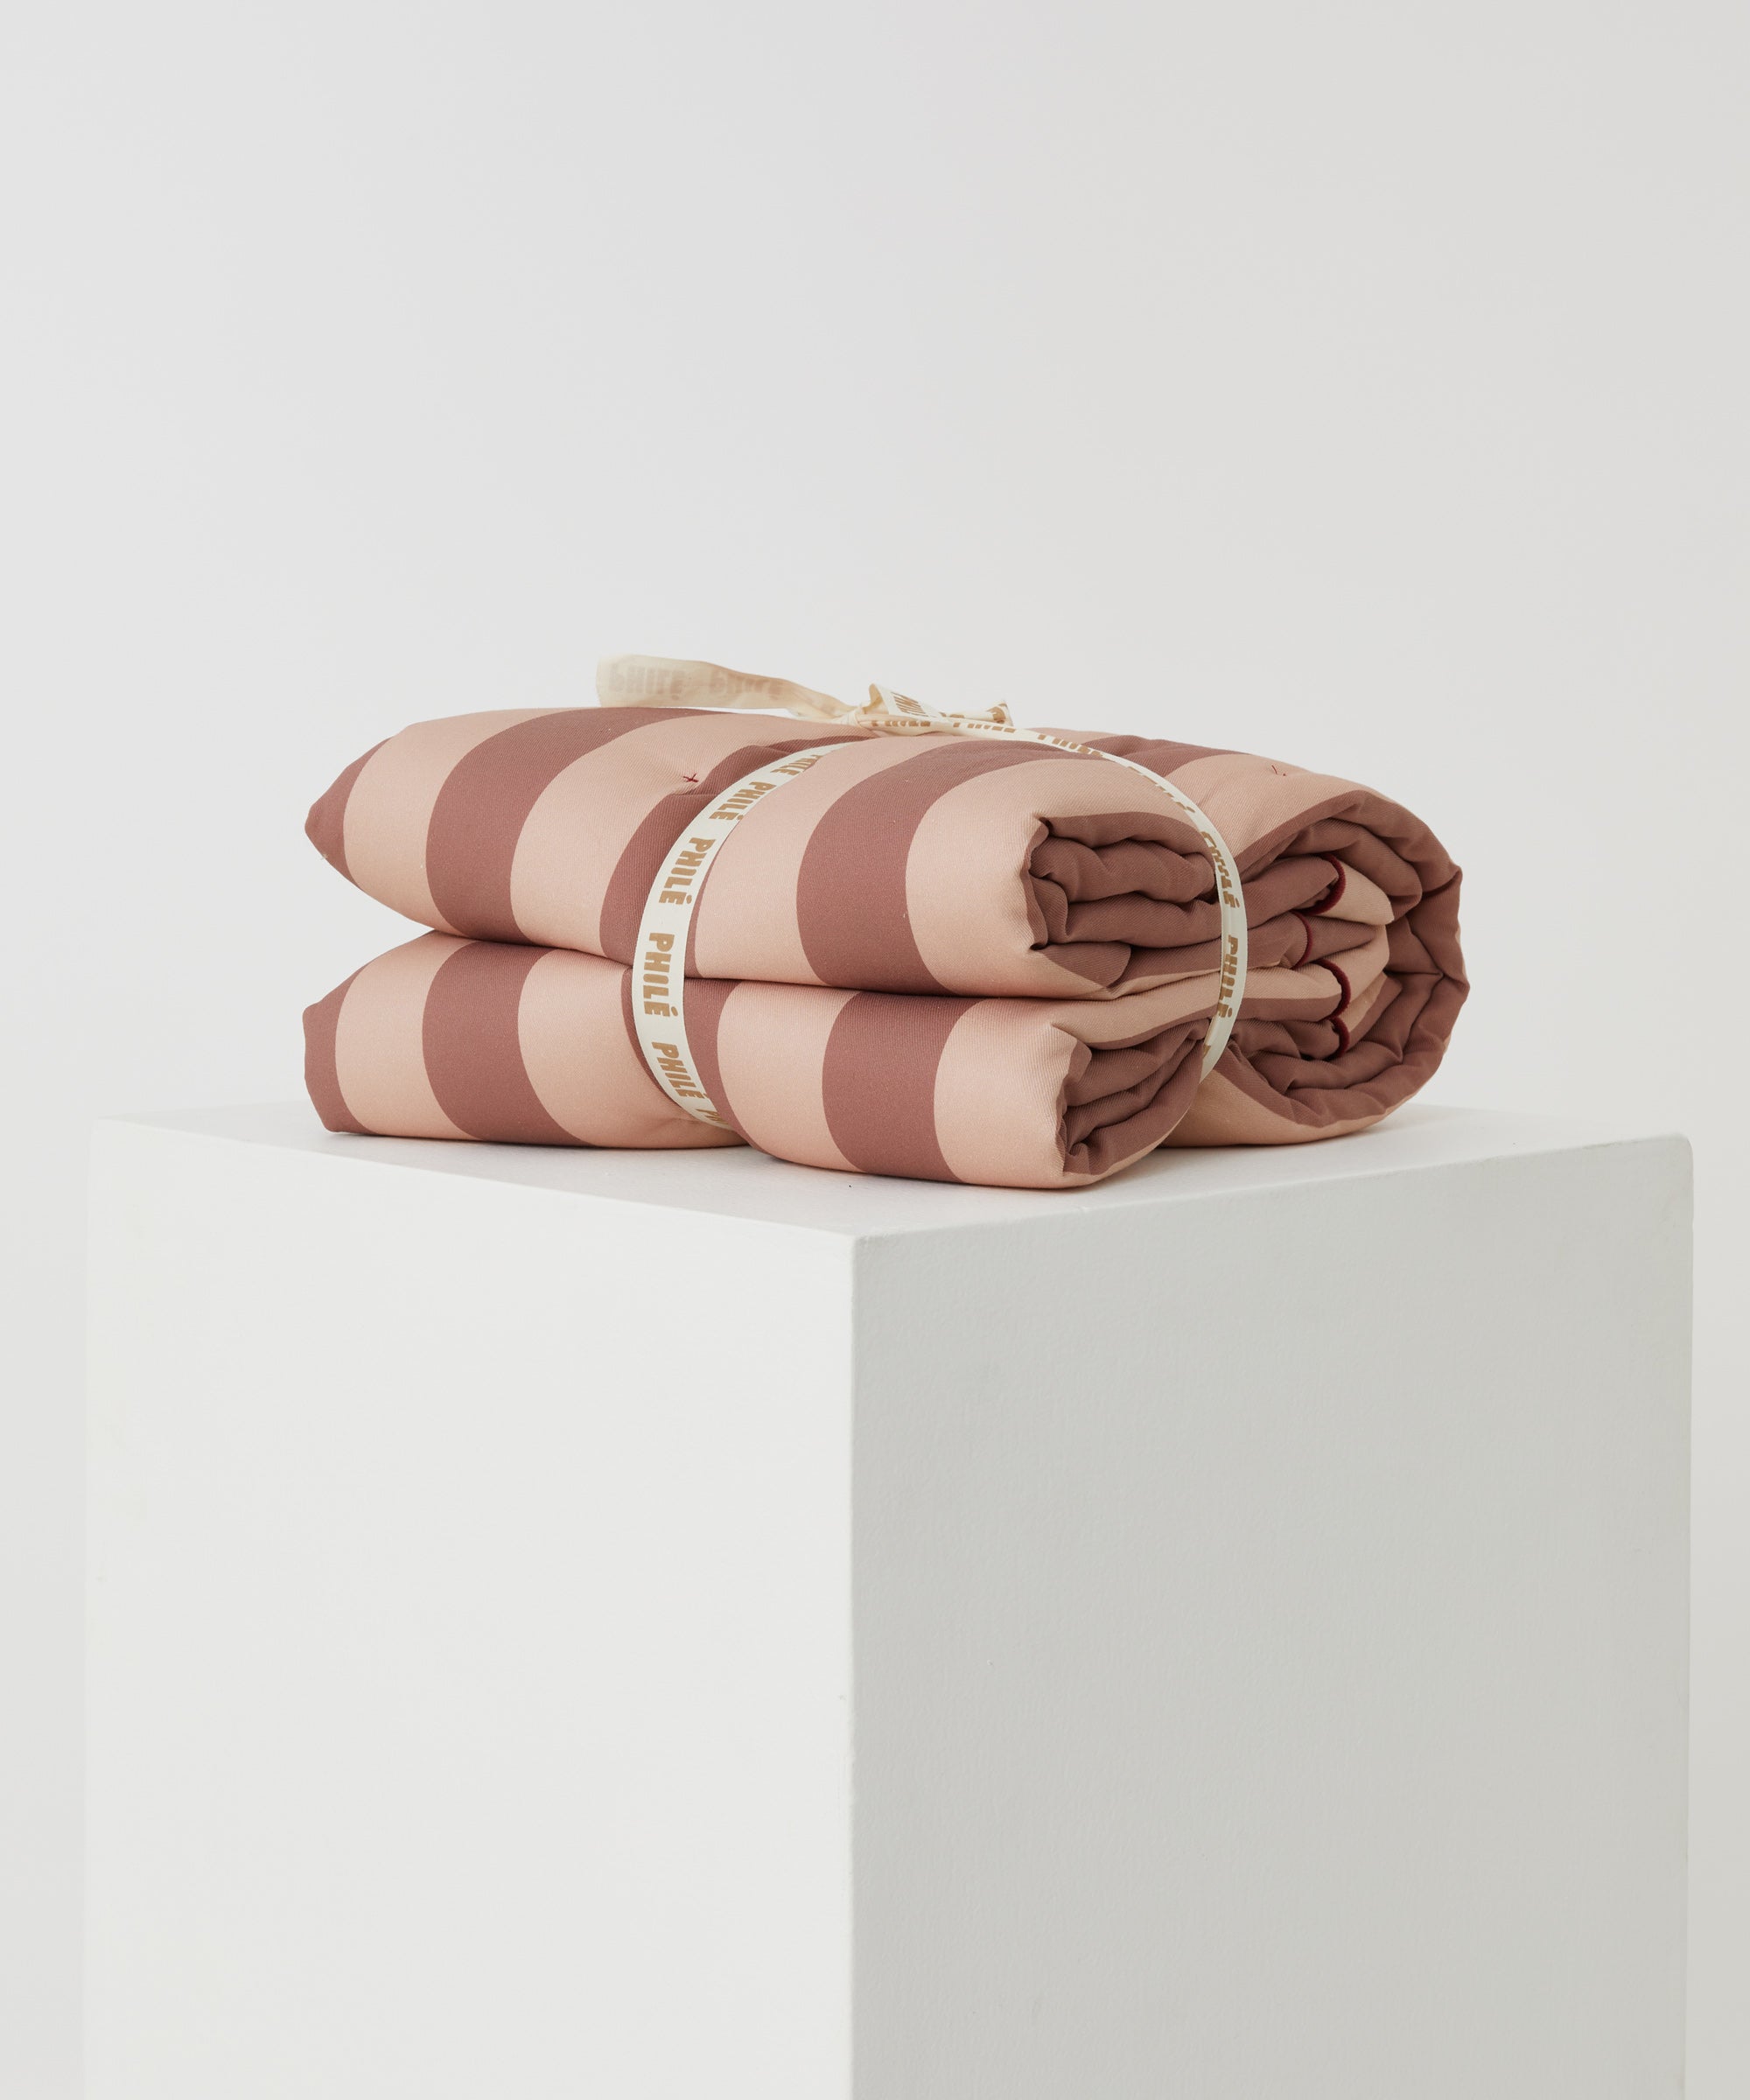 Striped Play Mat – Pink